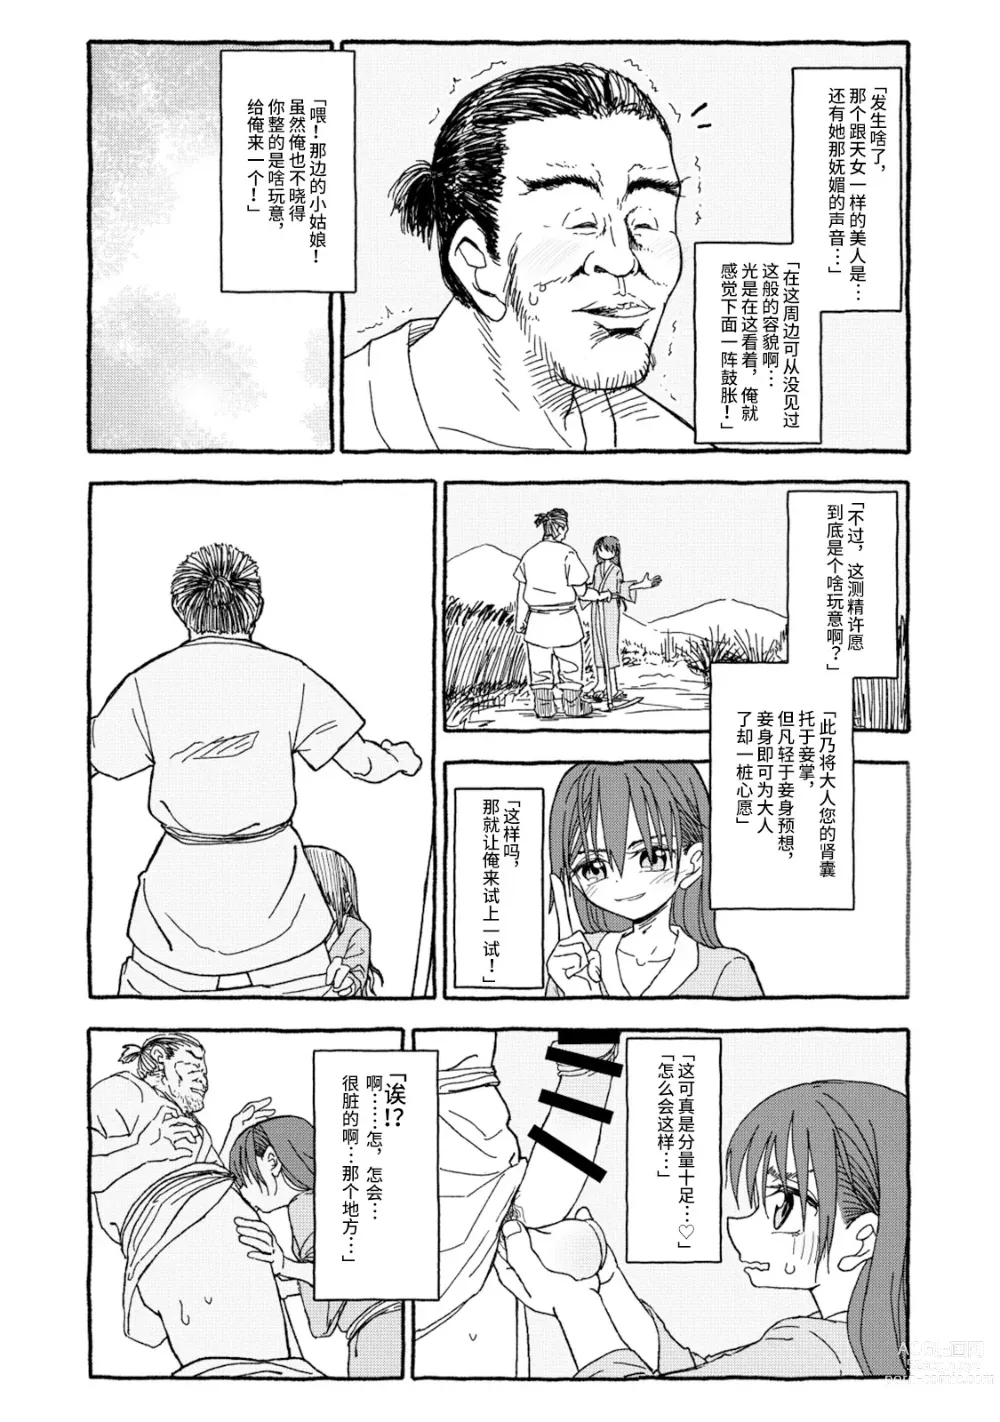 Page 4 of doujinshi 相遇四光年后合体 前篇